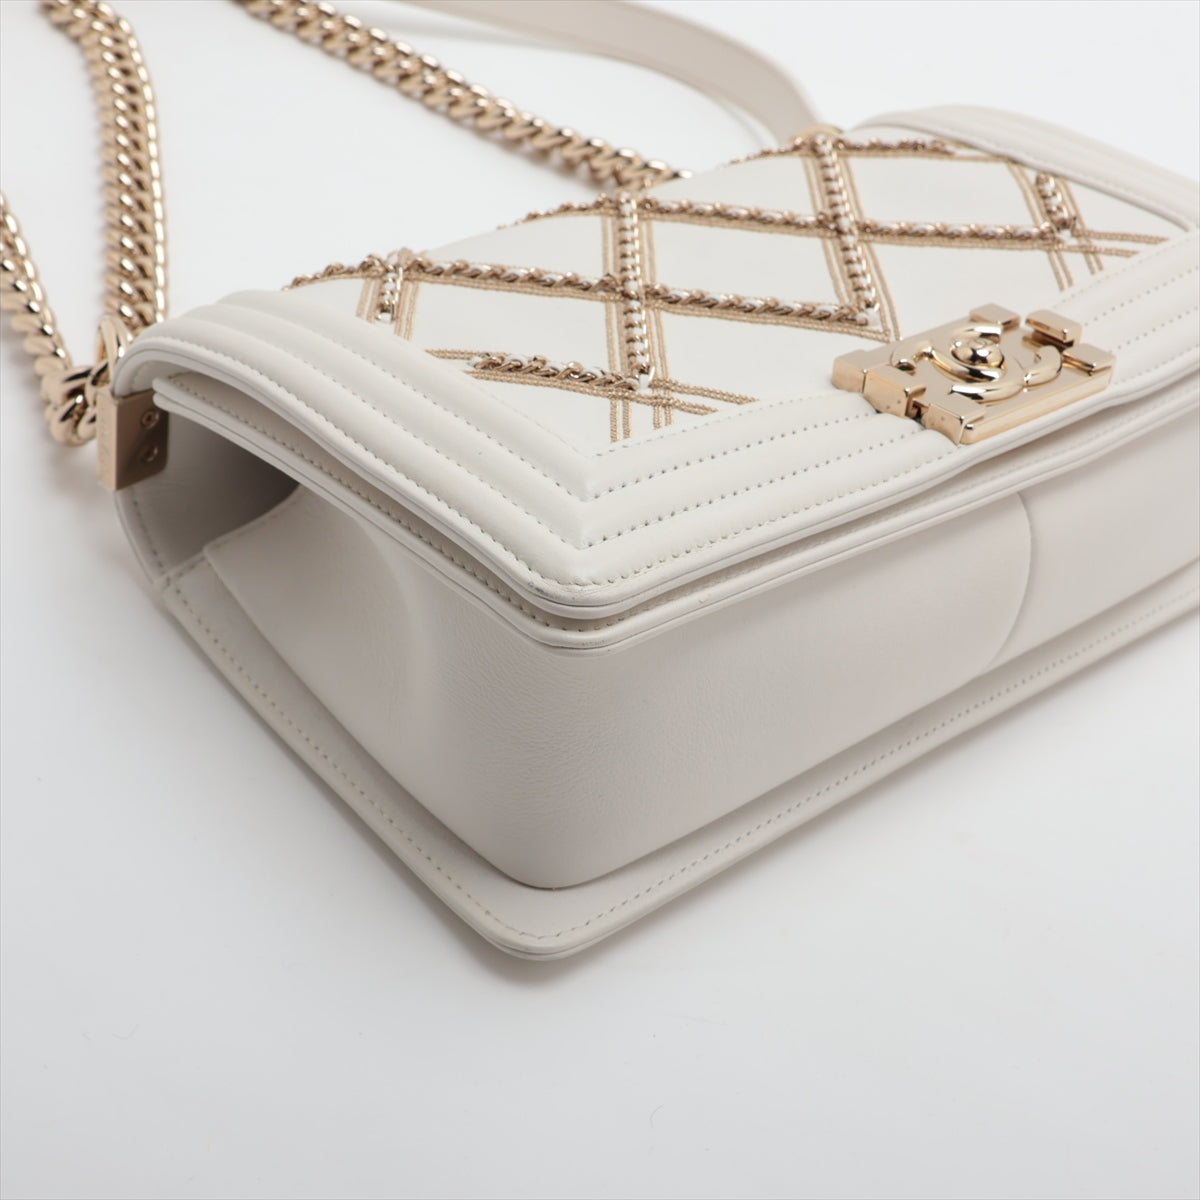 Chanel BOY CHANEL 25 Lambskin Chain Shoulder Bag White Gold Metal Fittings A67086